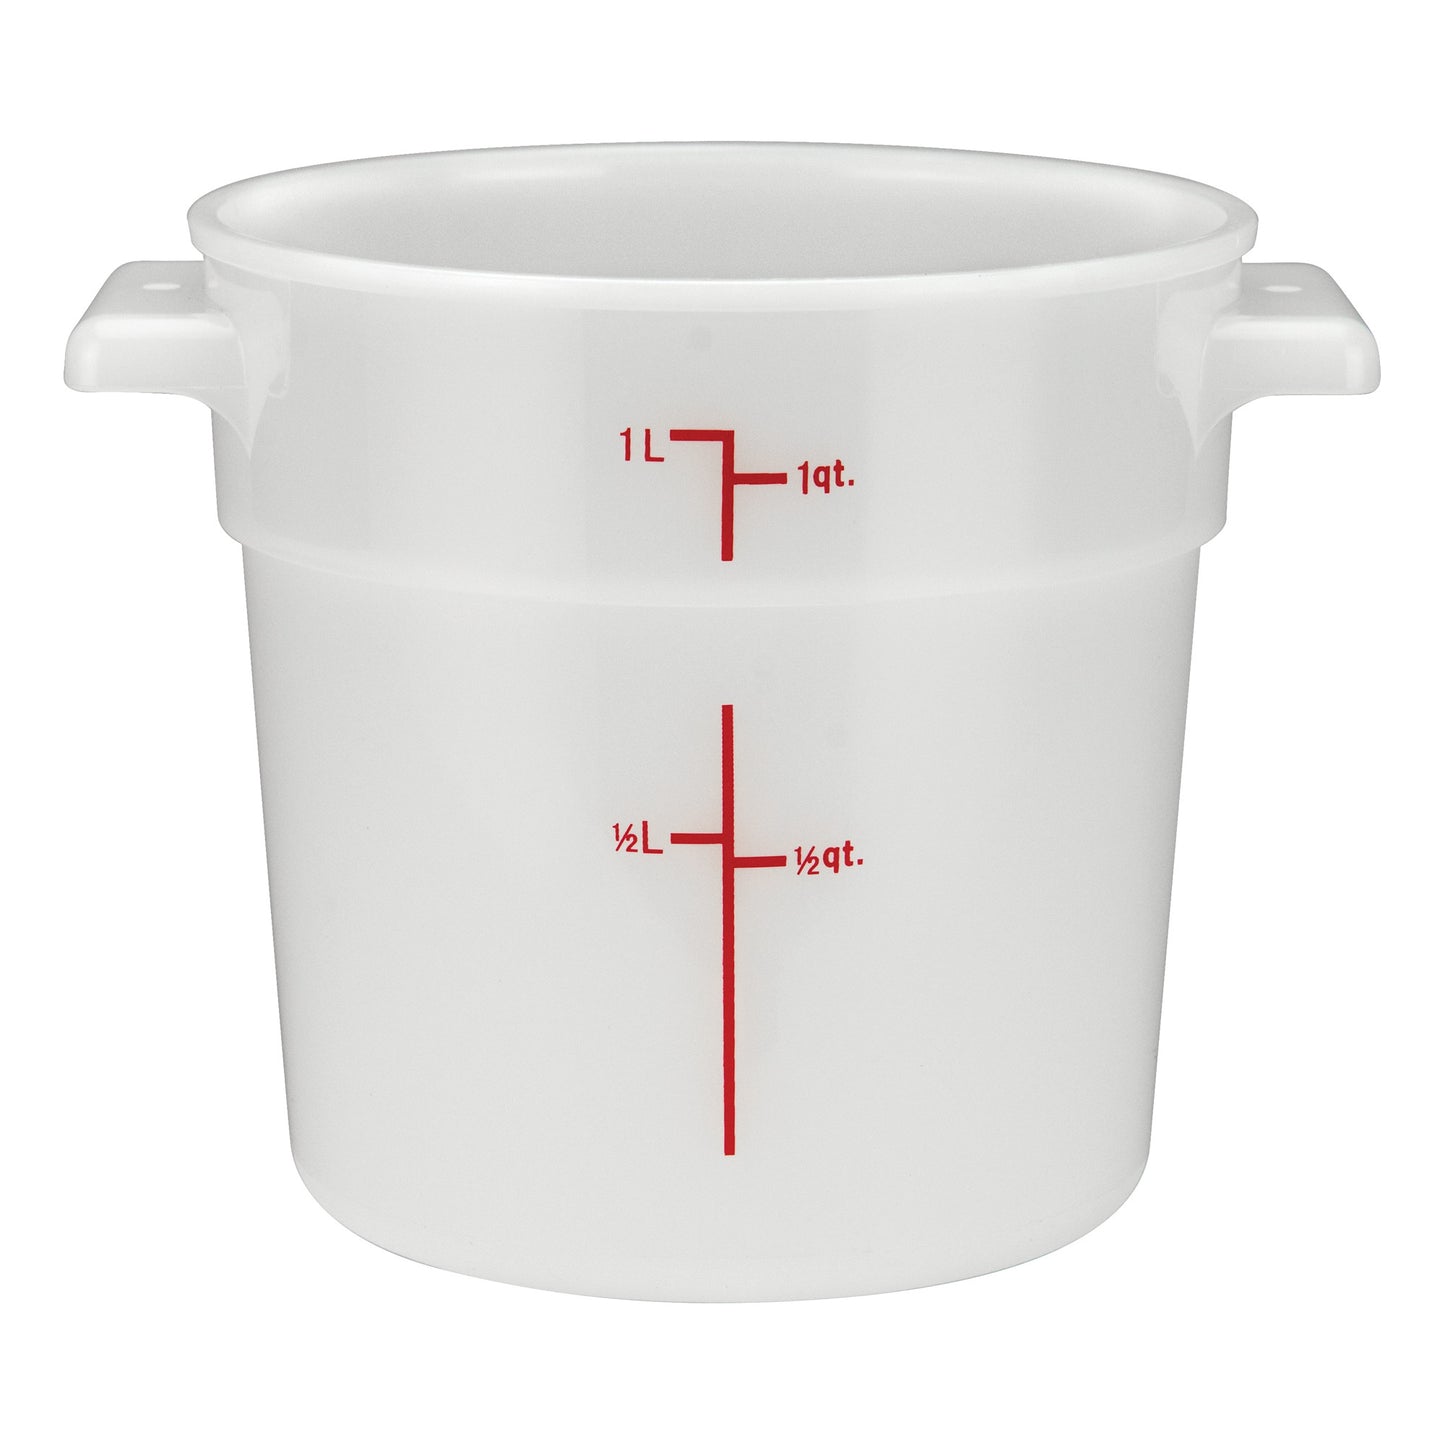 PPRC-1W - Round Storage Container, White, Polypropylene - 1 Quart